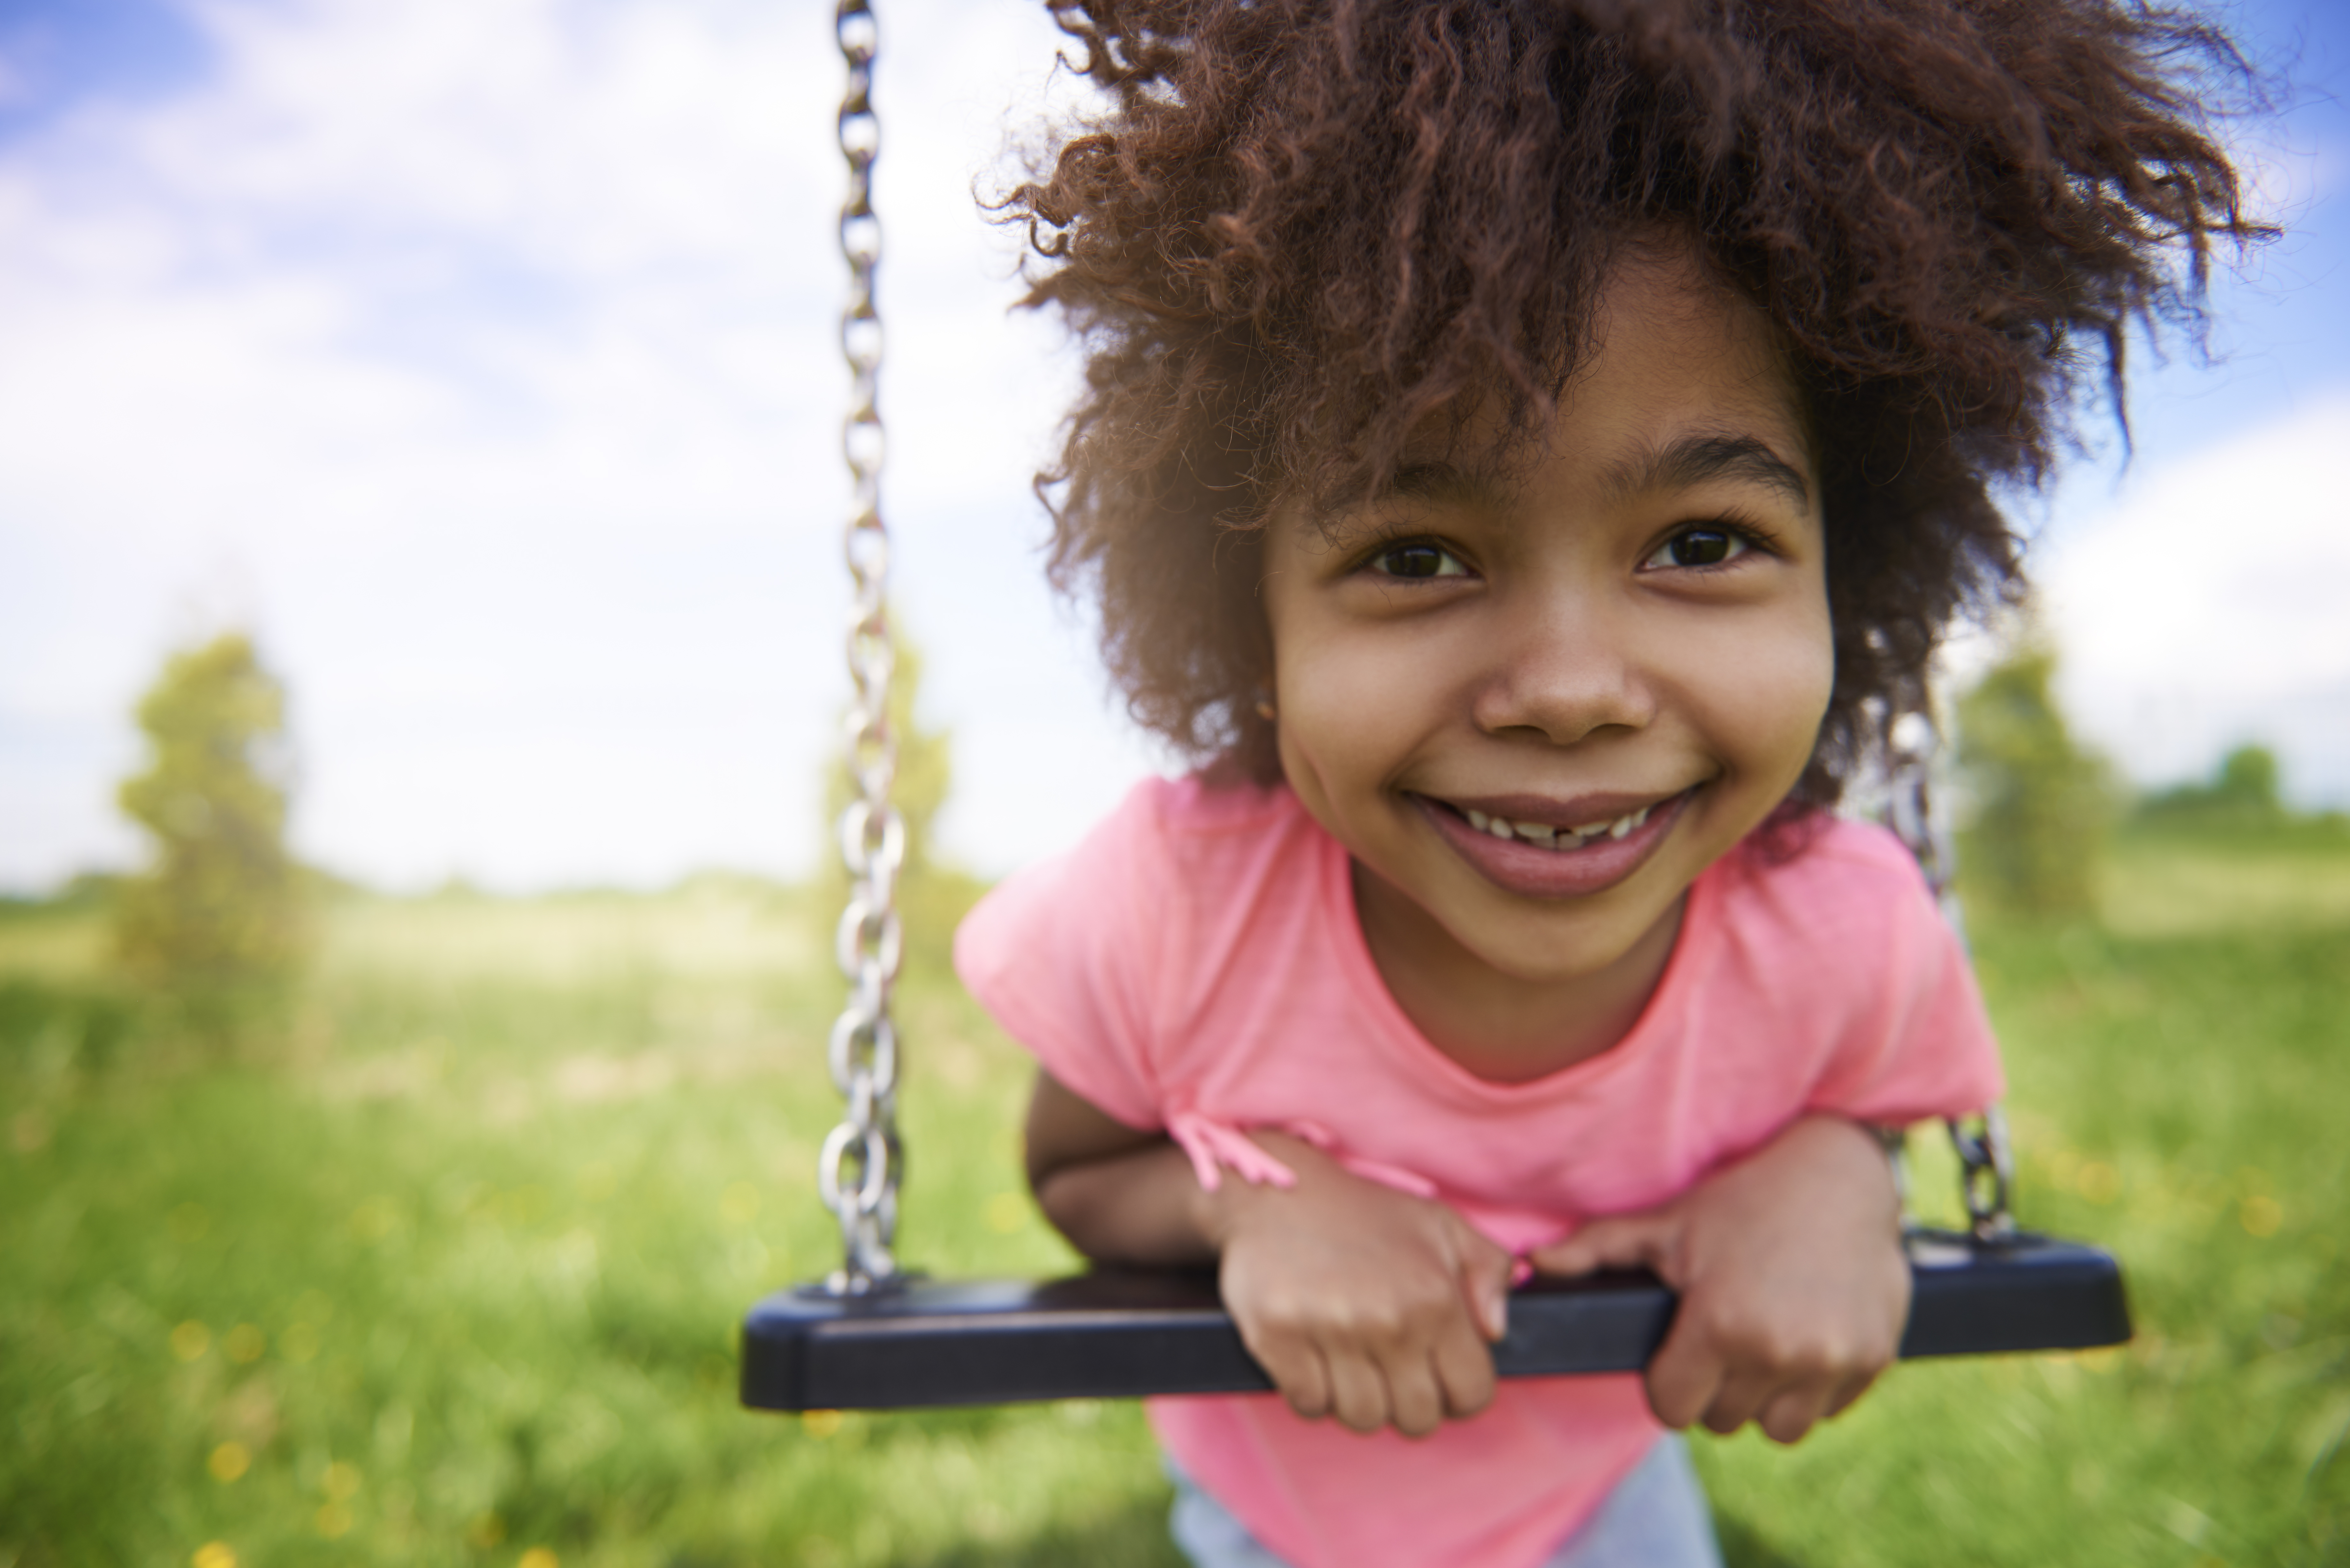 Smiling girl on swing.